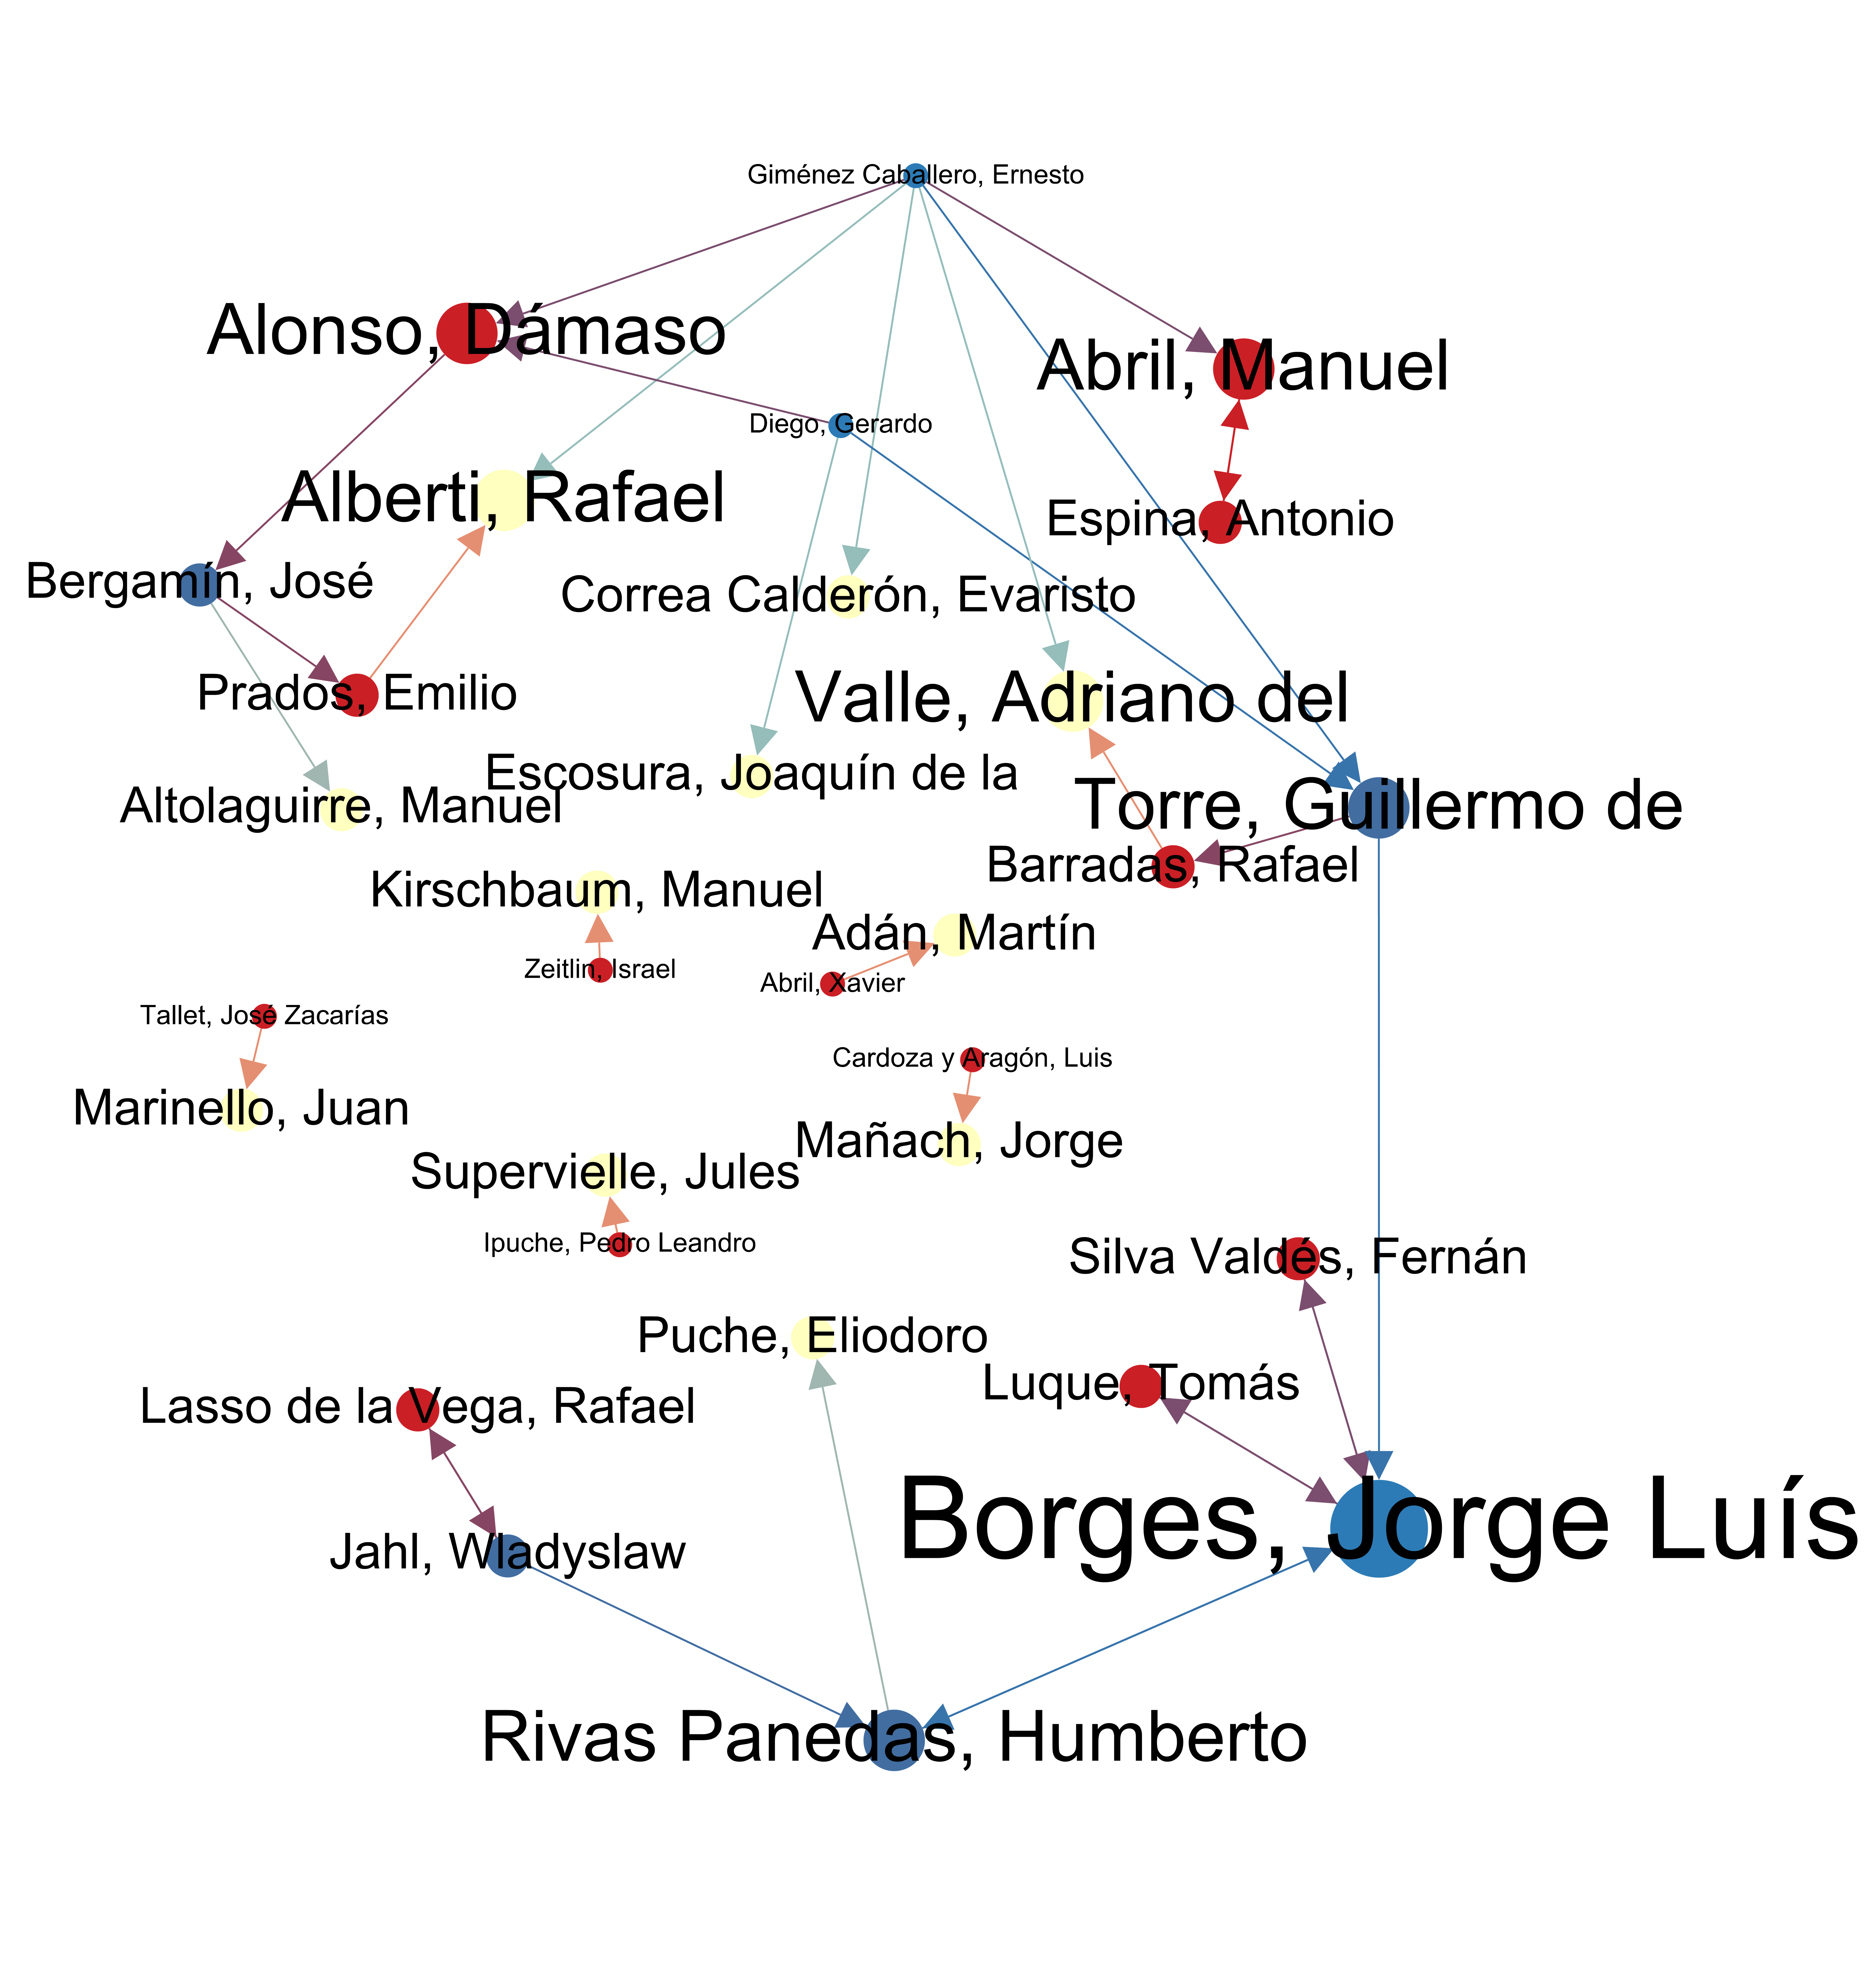 Figure 1: Dedication network